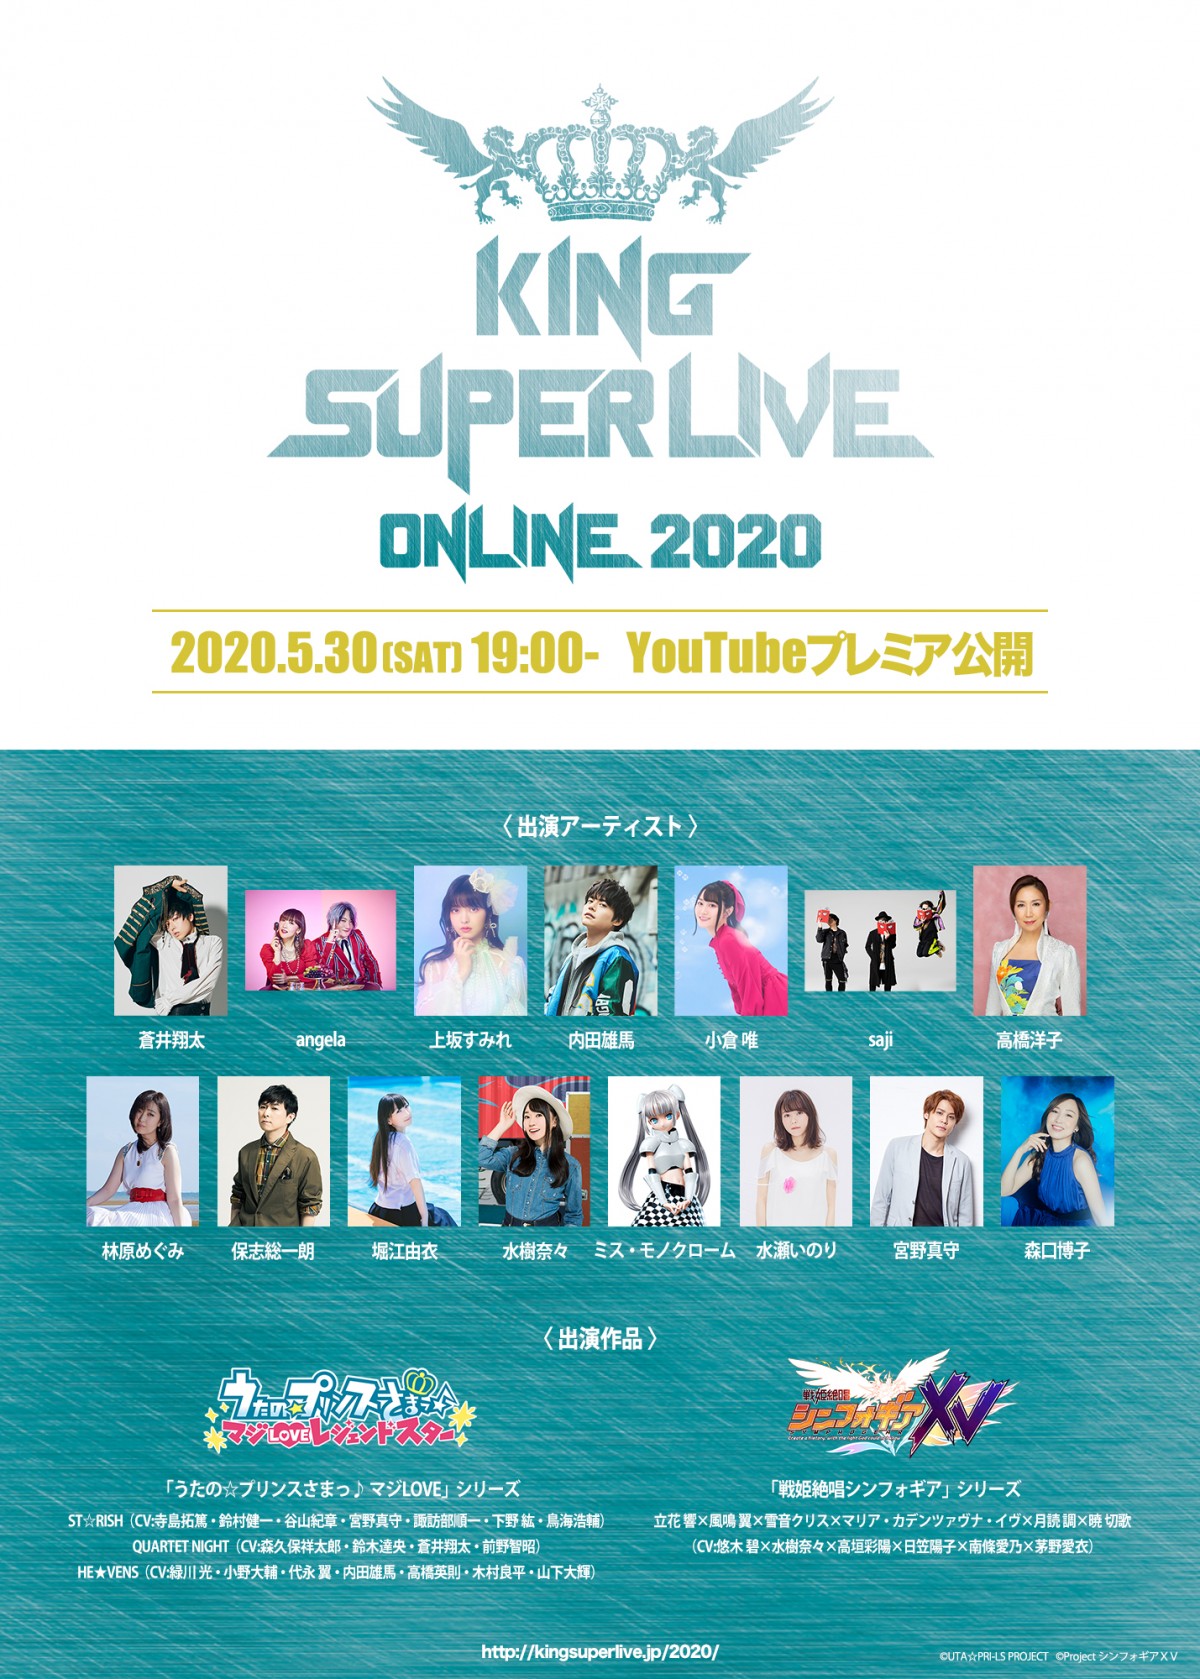 KING SUPER LIVE』オンラインで30日開催 過去ライブ映像使用しセットリスト組む | ORICON NEWS